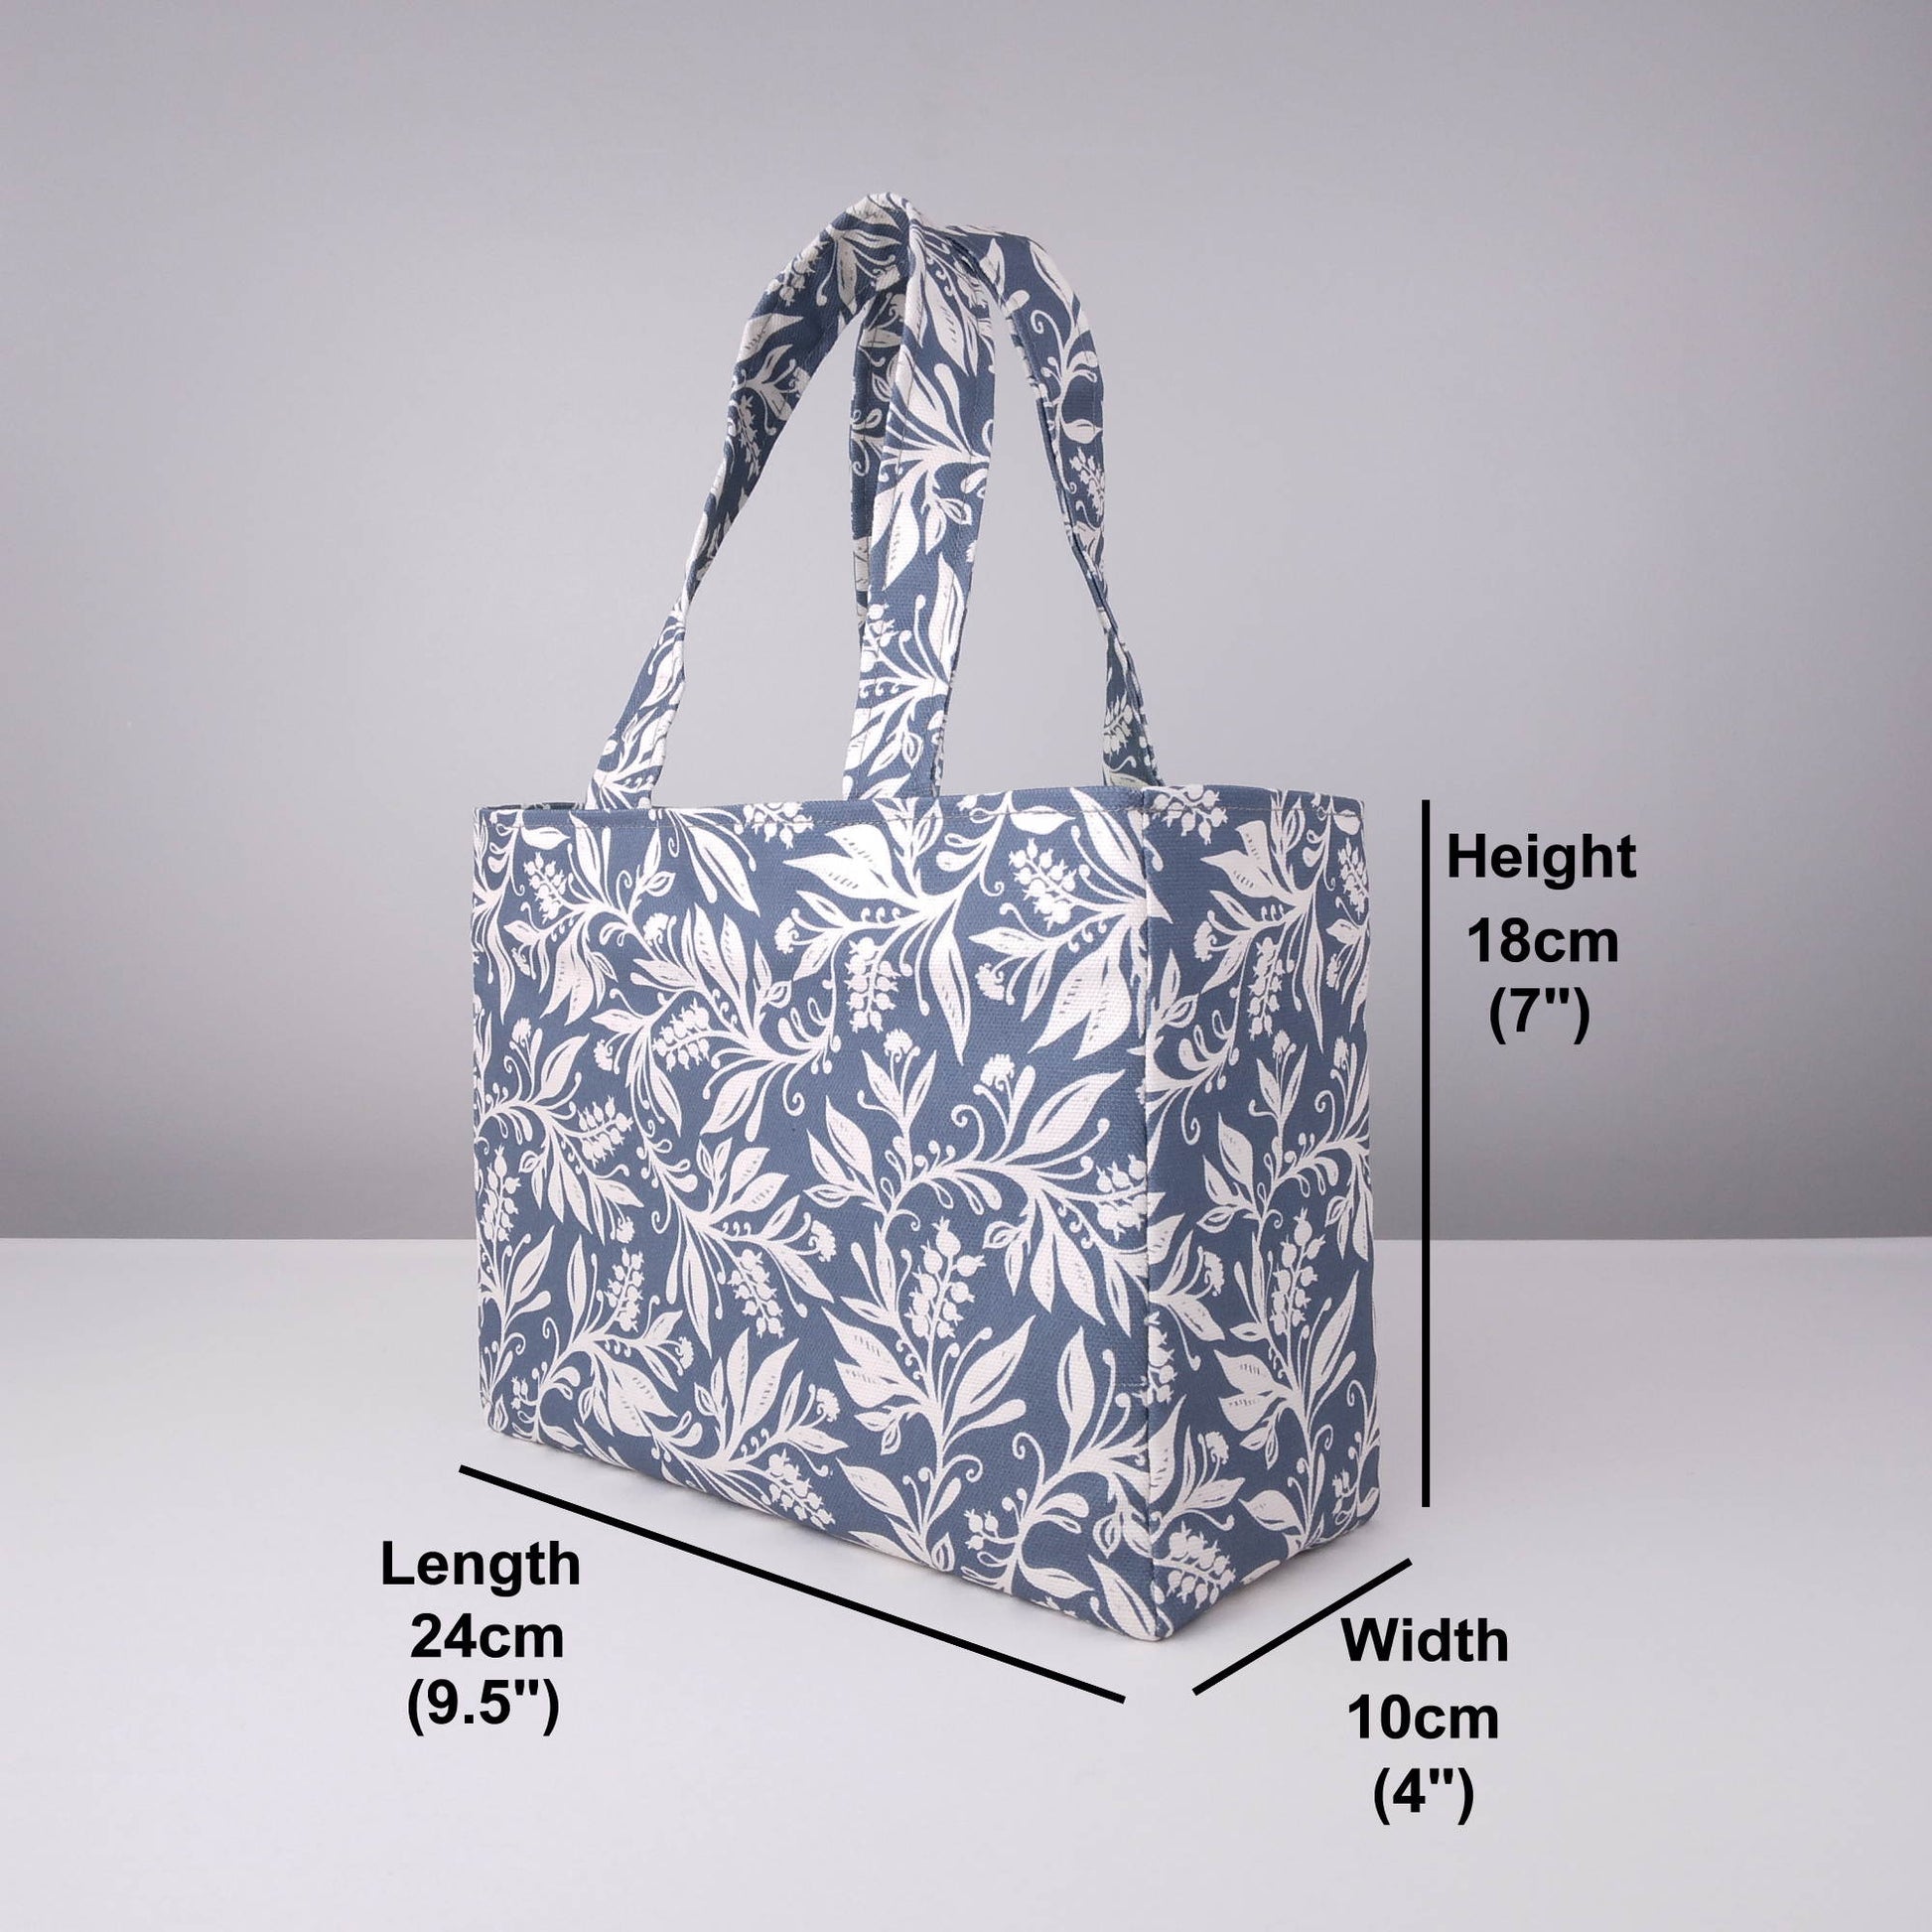 Mini tote bag with white wildflower silhouette design on dark blue background